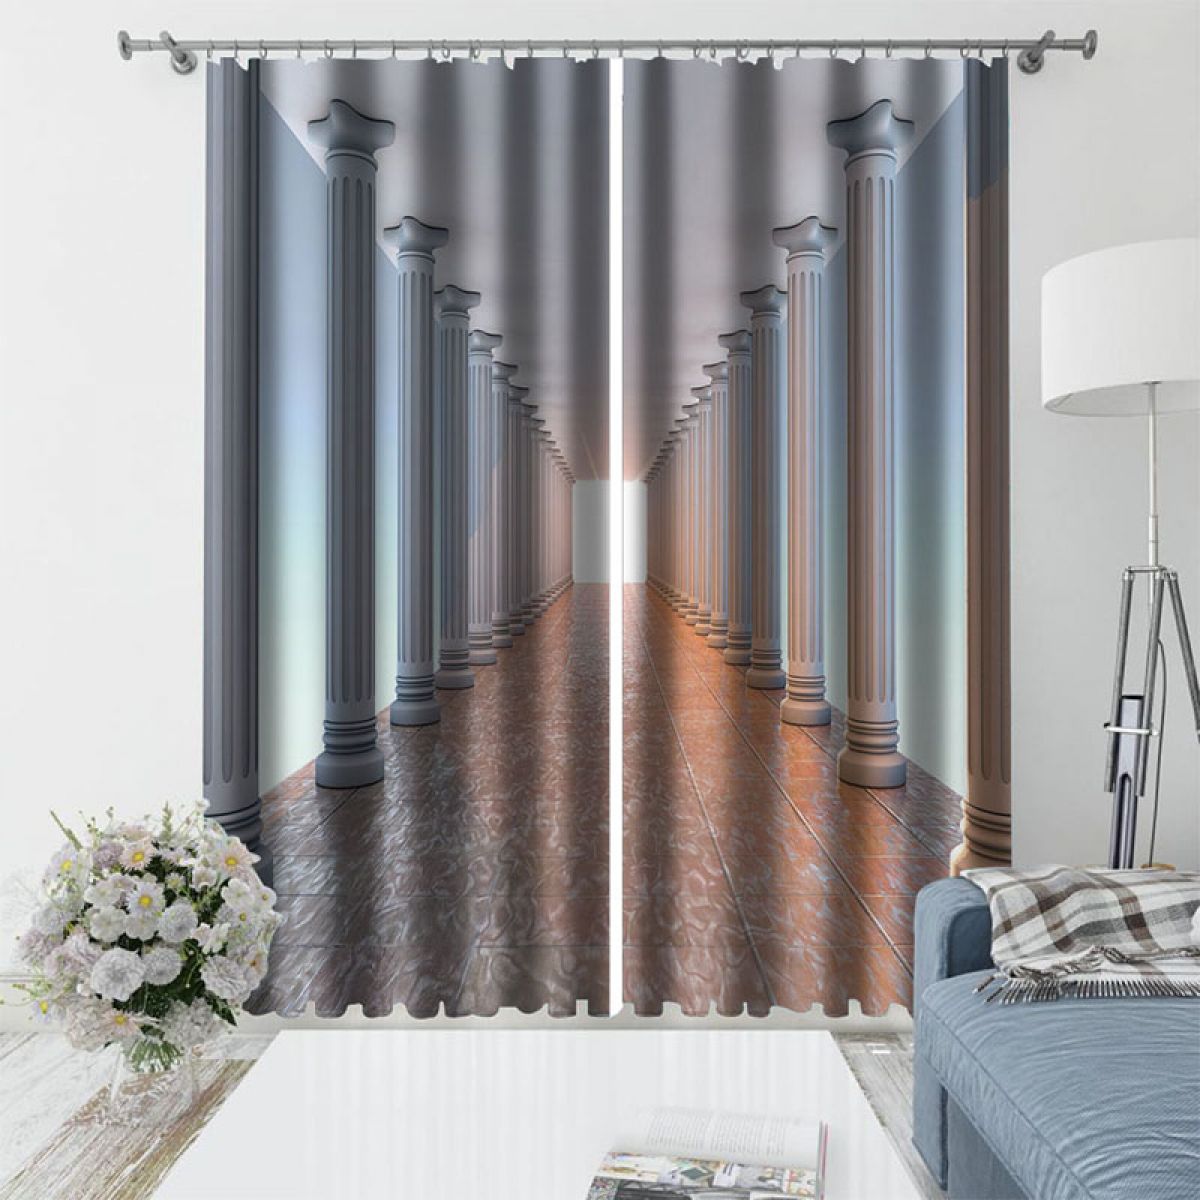 3d corridor with pillars printed window curtain home decor 5165